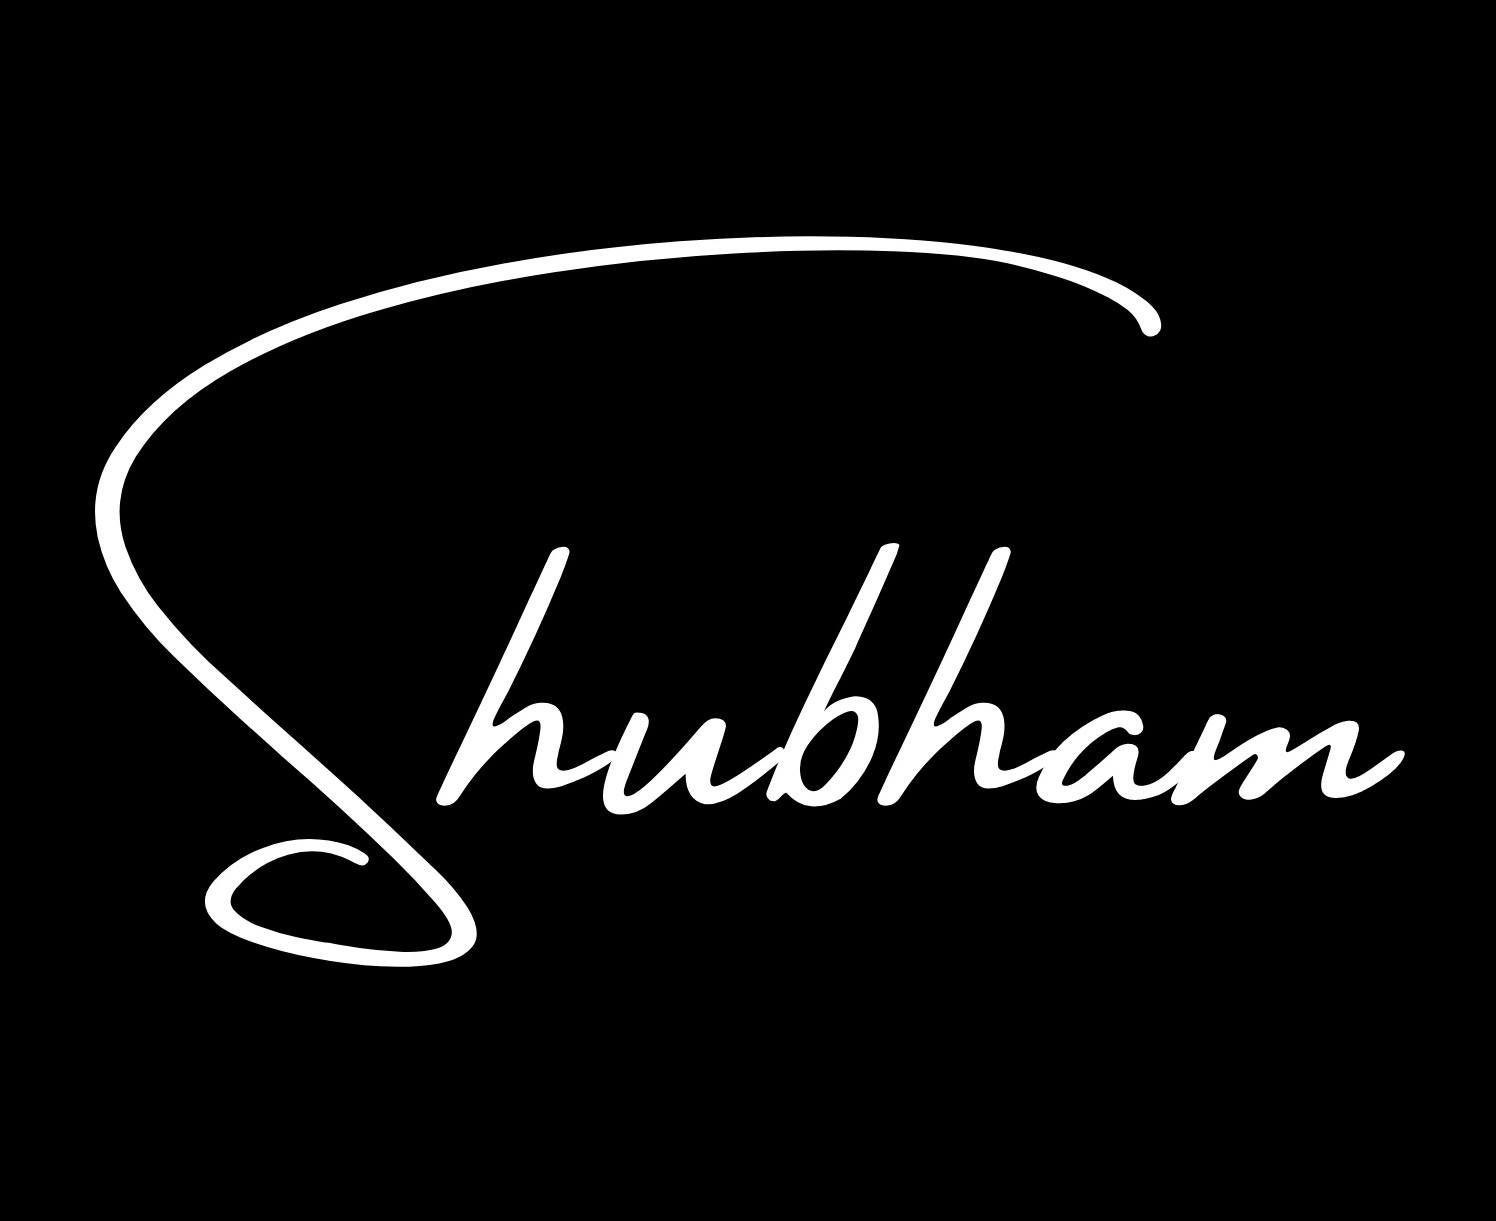 Shubharambh Logo Set New Hindi Calligraphy Stock Illustration 2130144587 |  Shutterstock